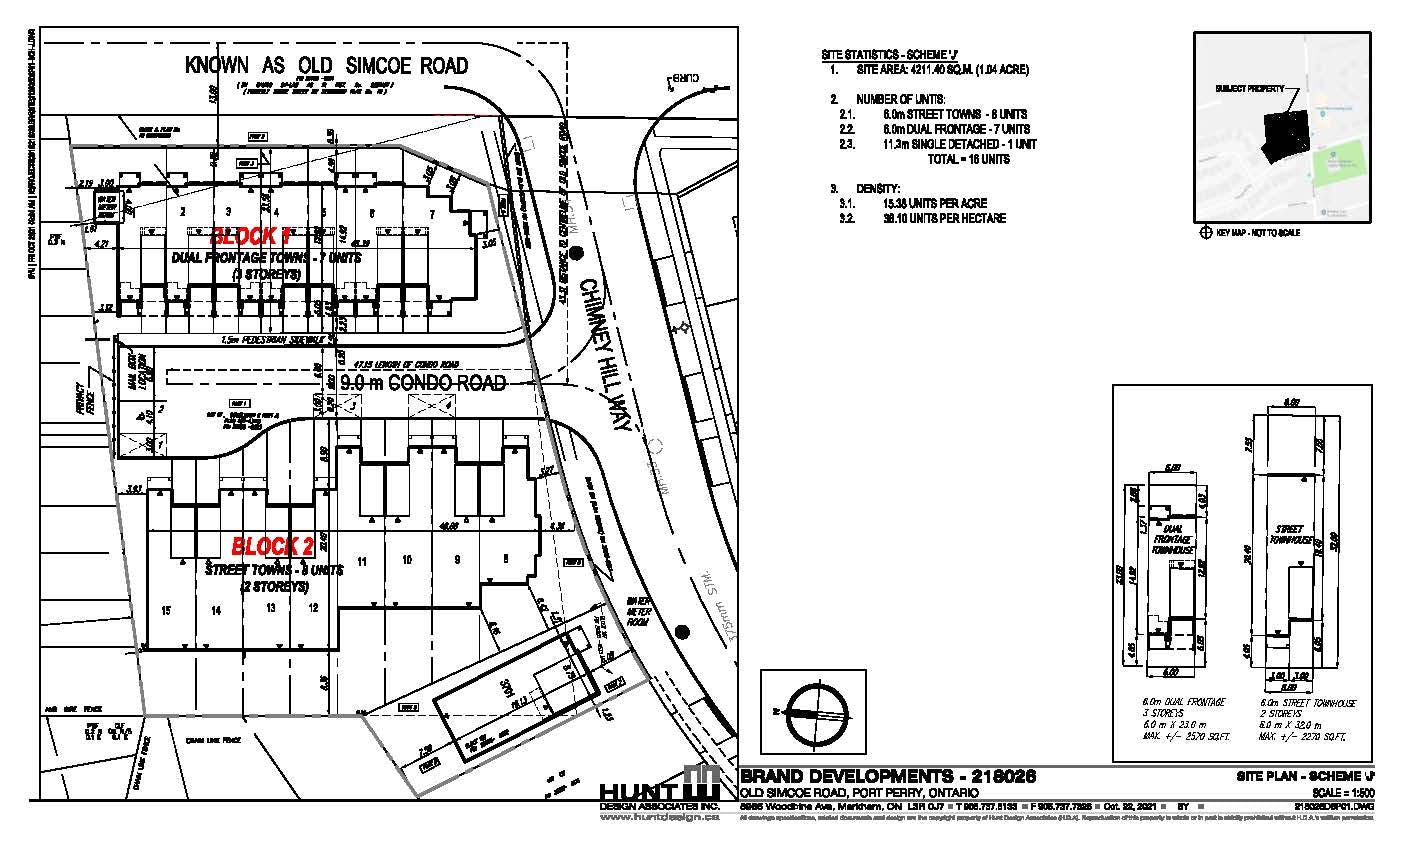 2021 10 22 Site Plan Scheme J_15762 Old Simcoe Rd.jpg